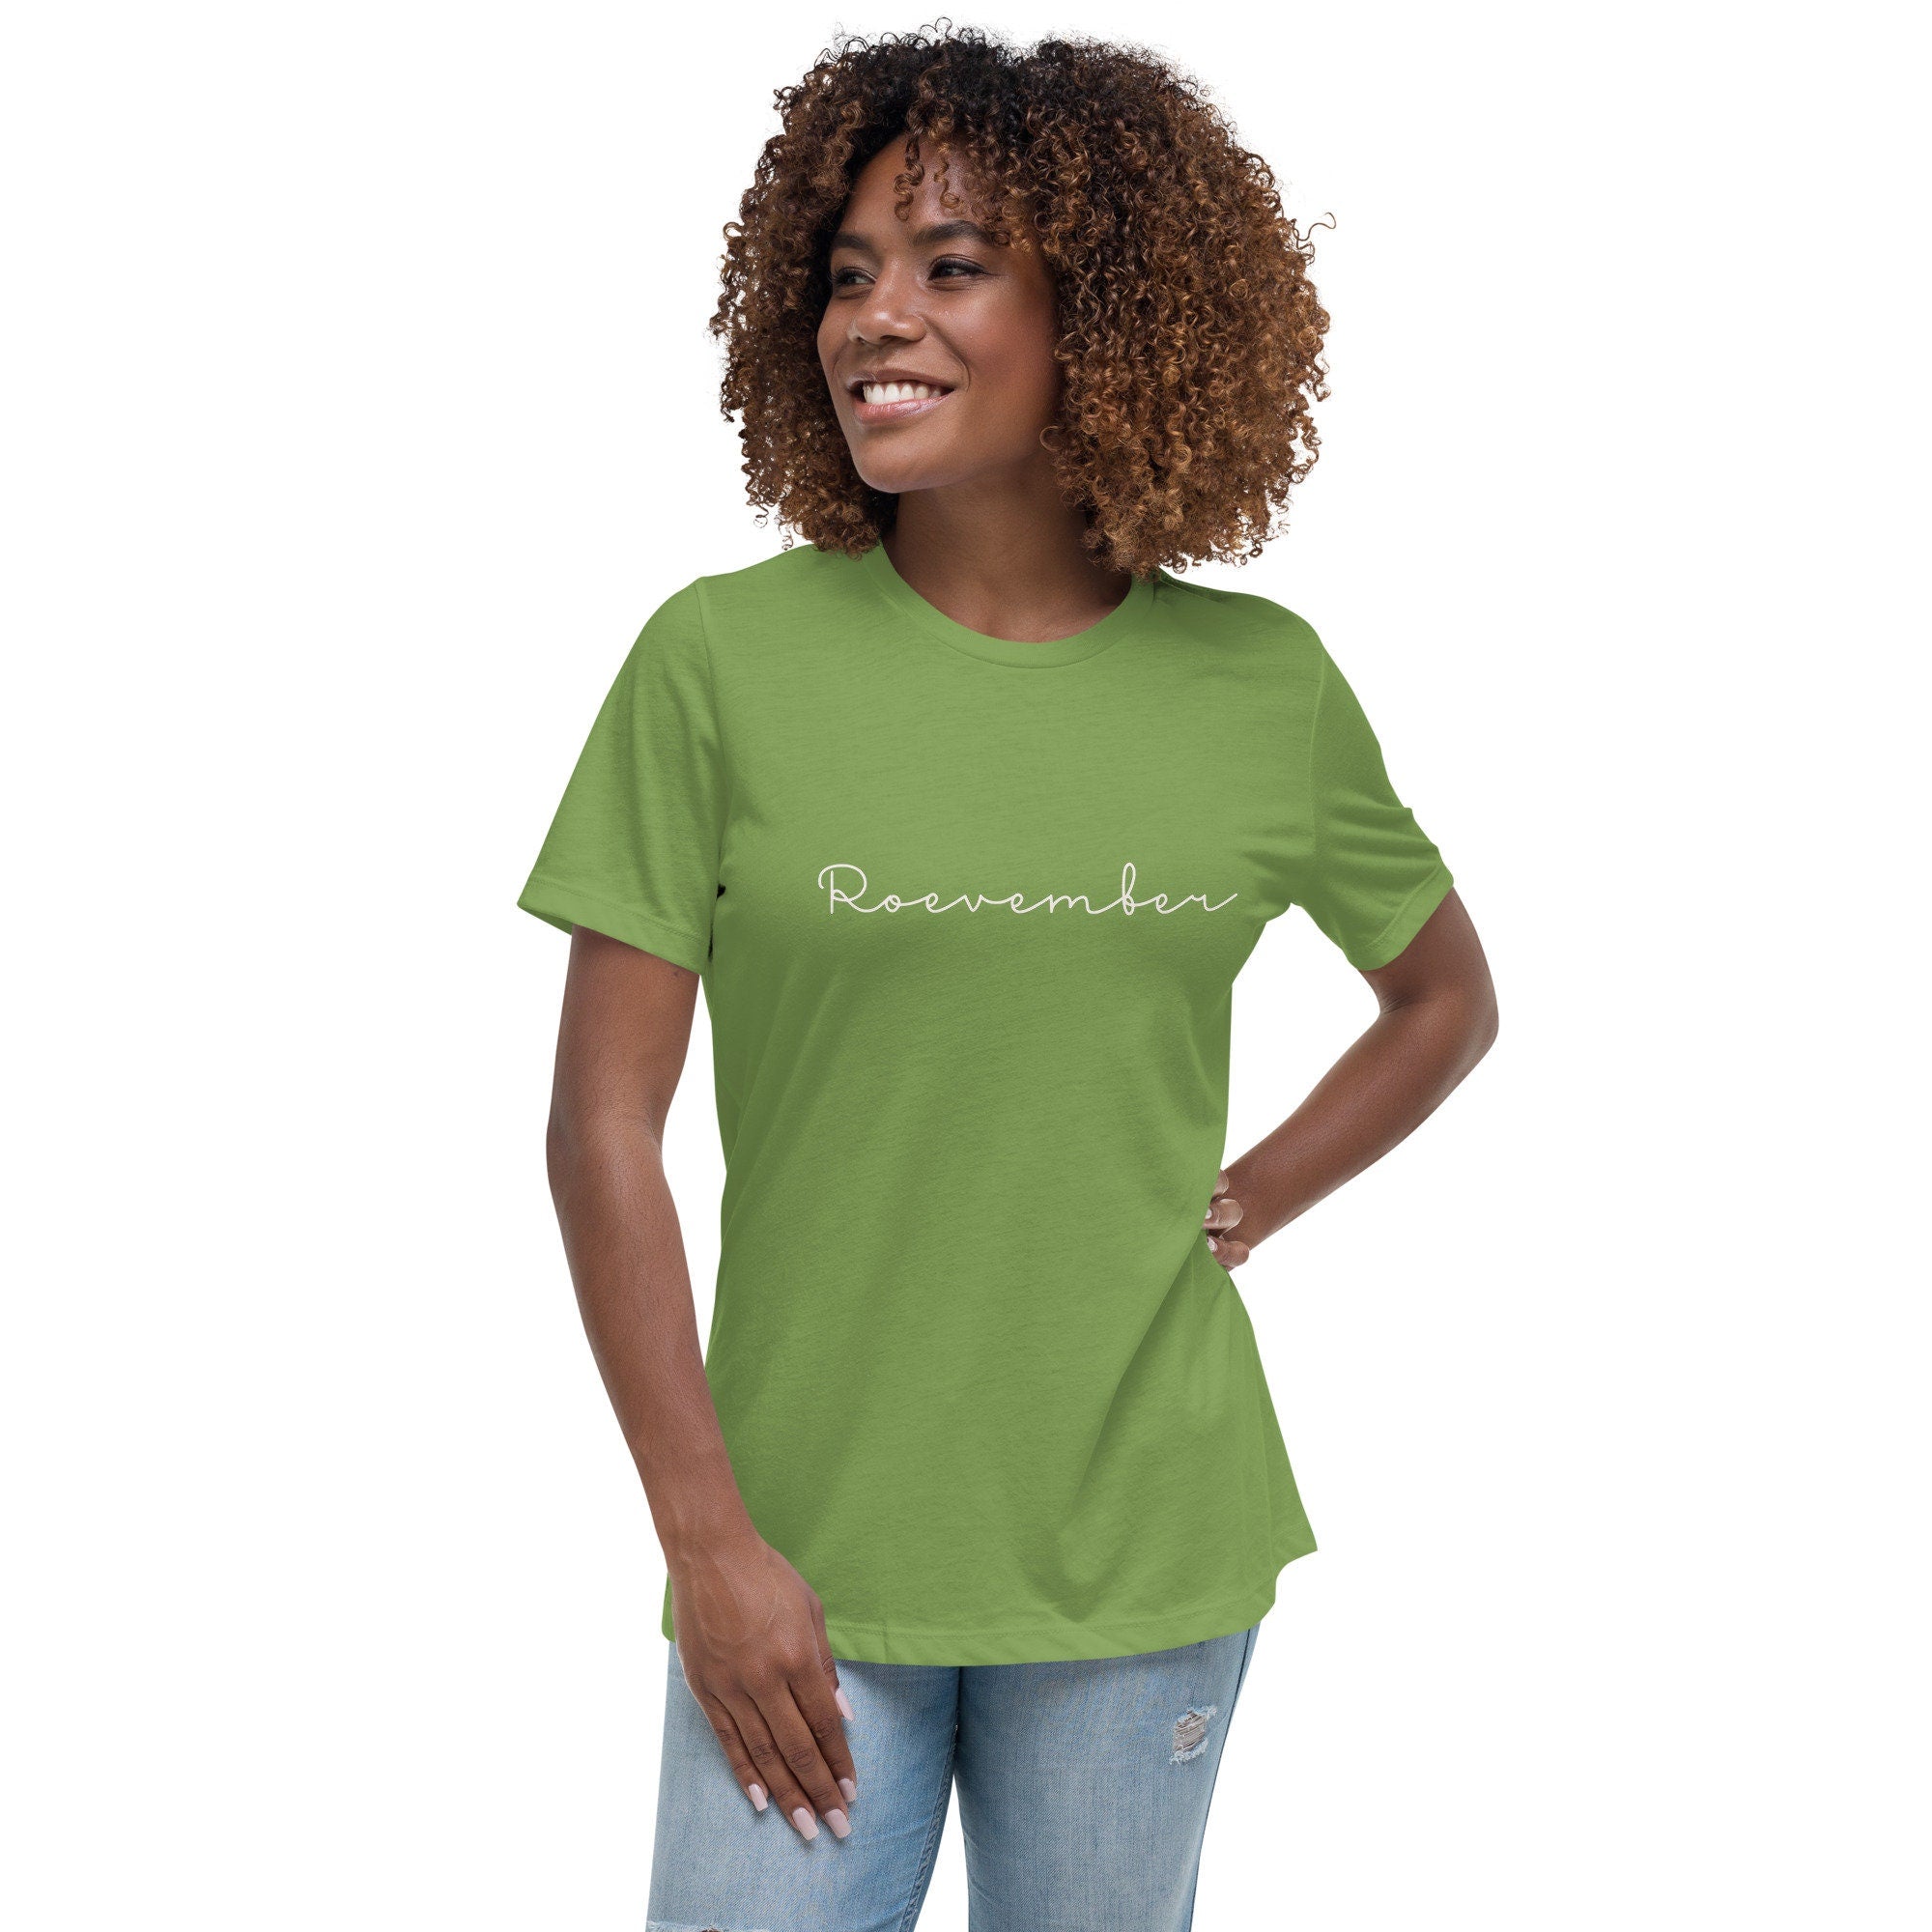 Roevember Women's T-Shirt Salt and Sparkle